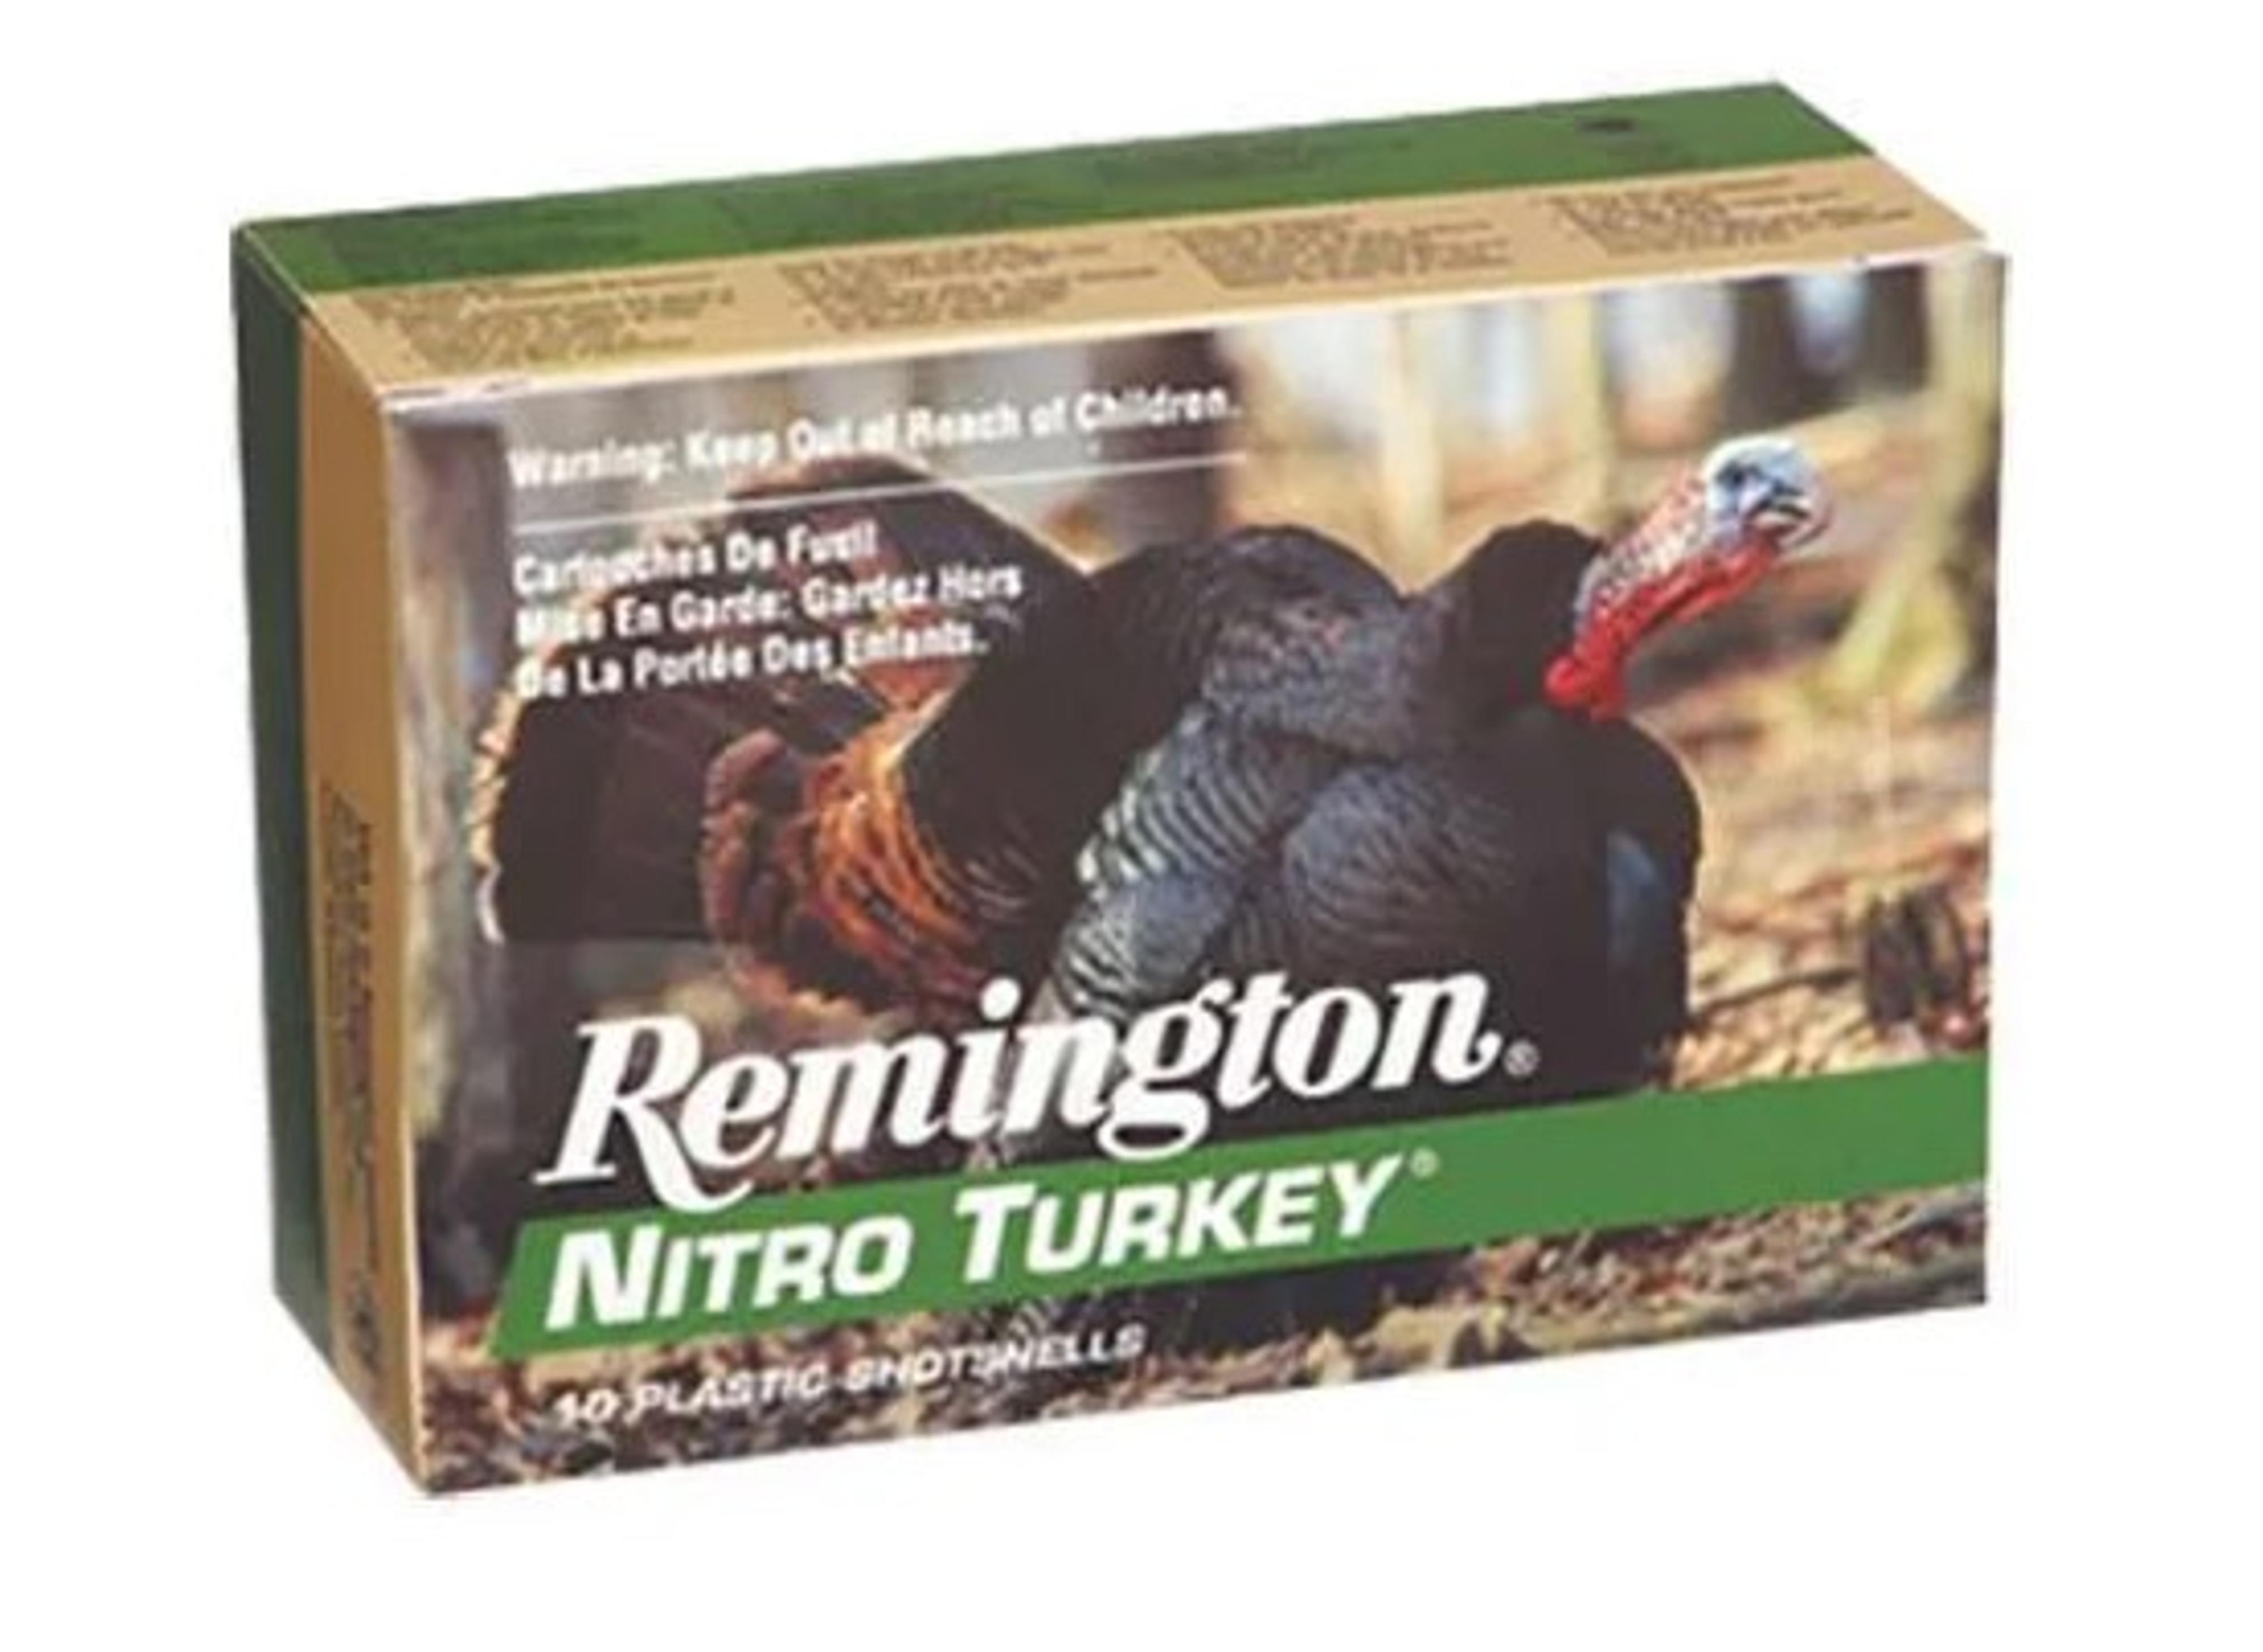  Remington Nitro Turkey 3.5 